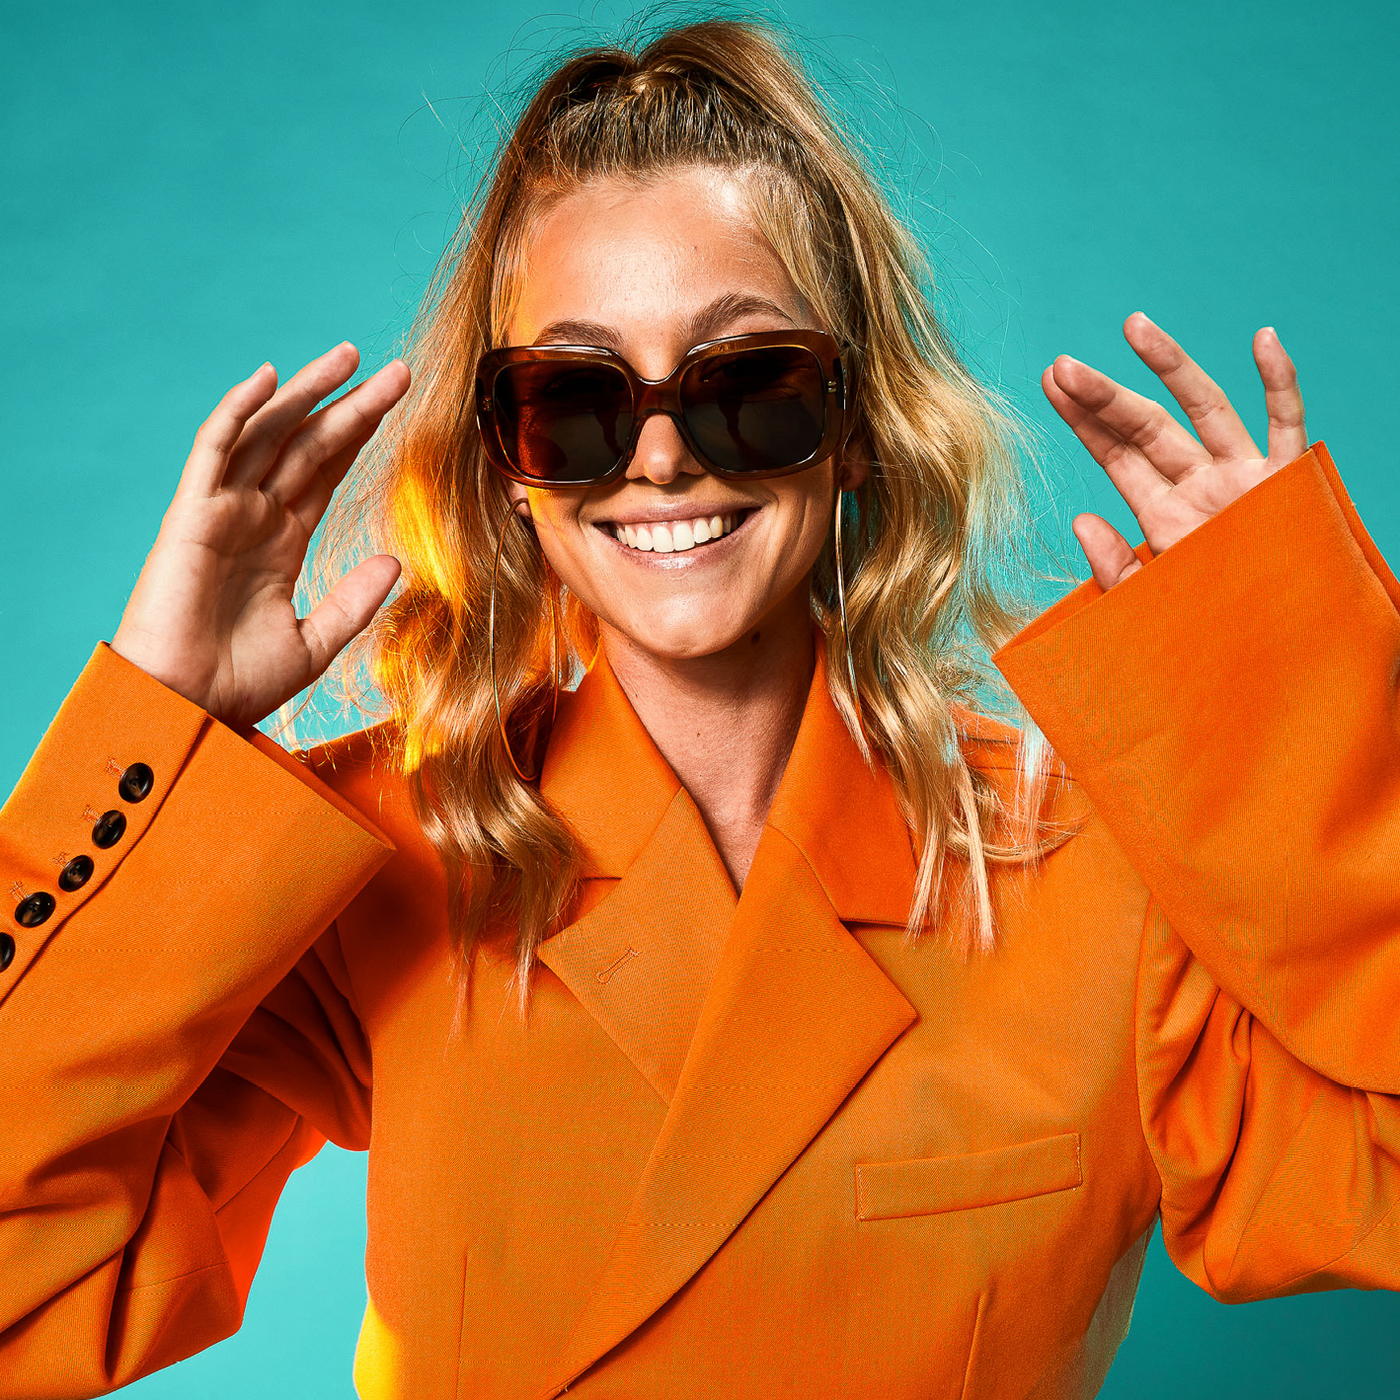 Imogen Caldwell wearing an orange jacket and oversized sunglasses